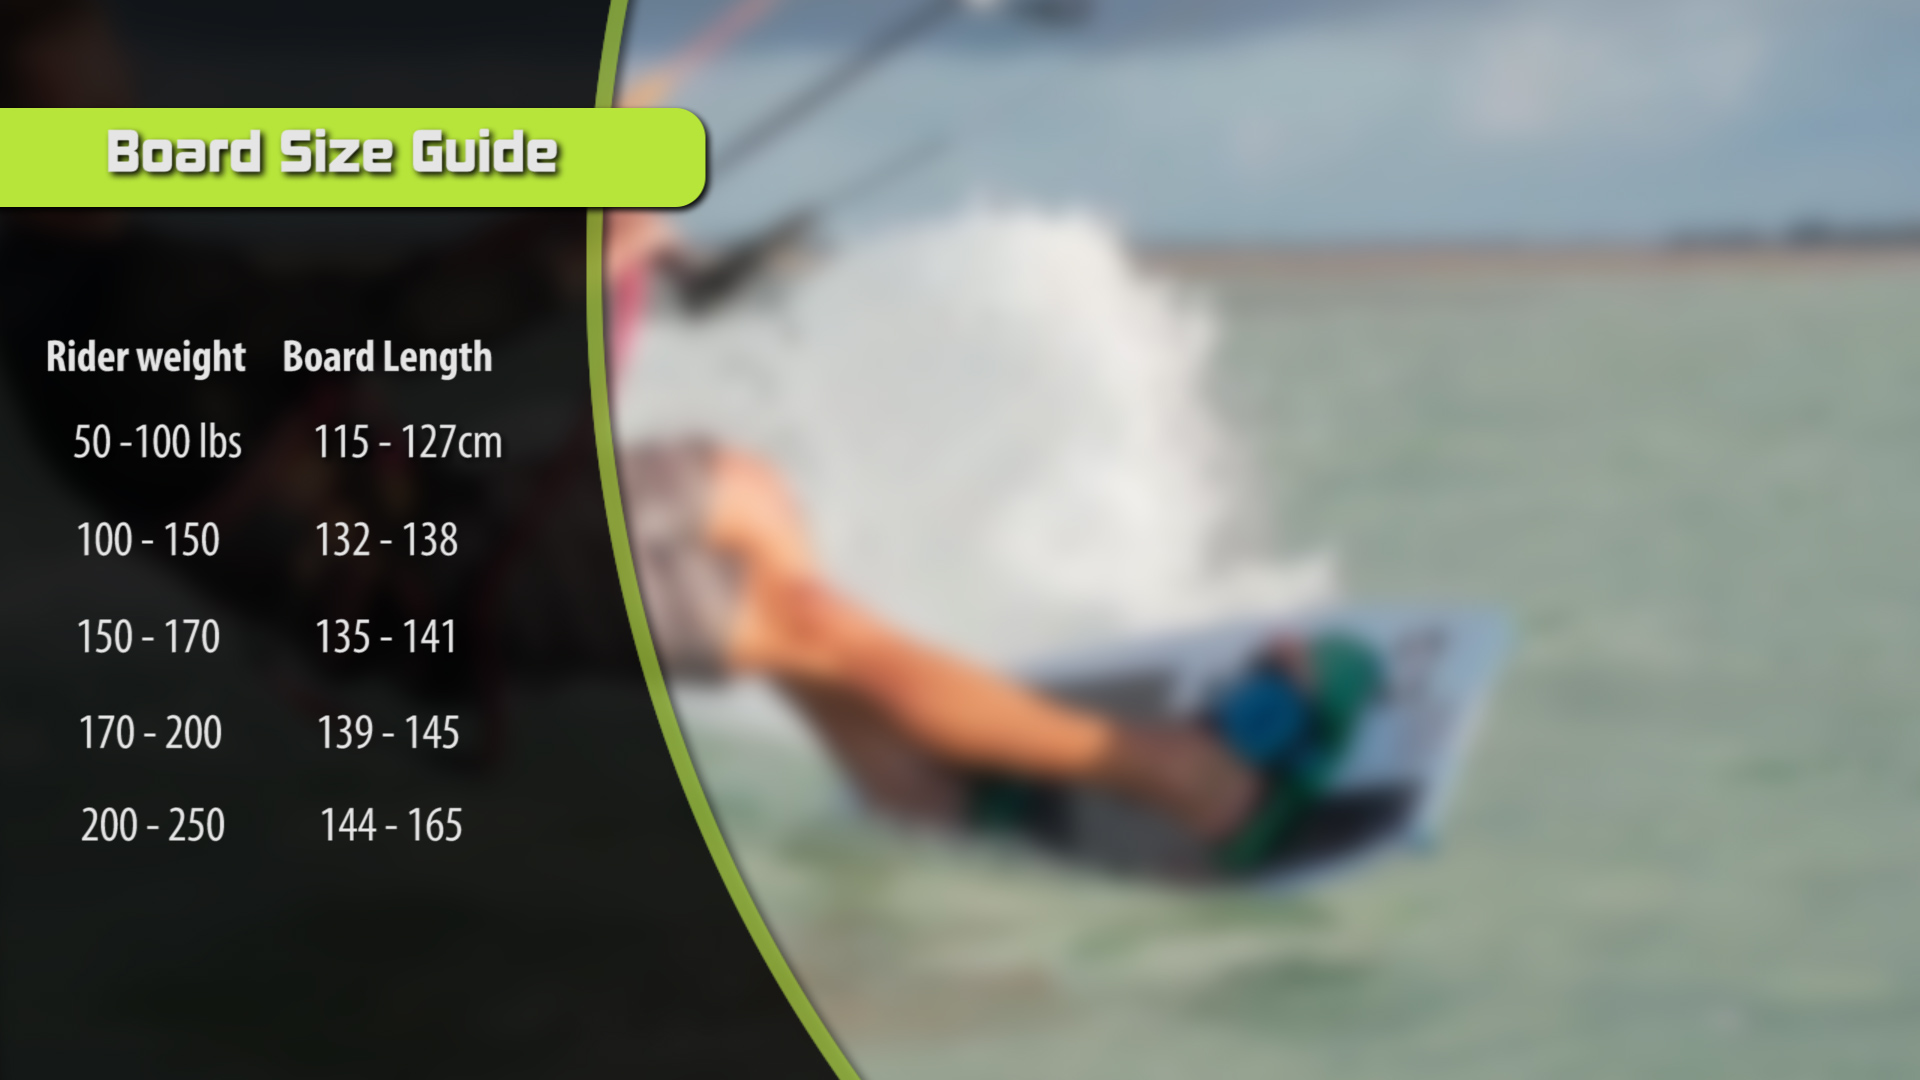 Kiteboard Weight Chart